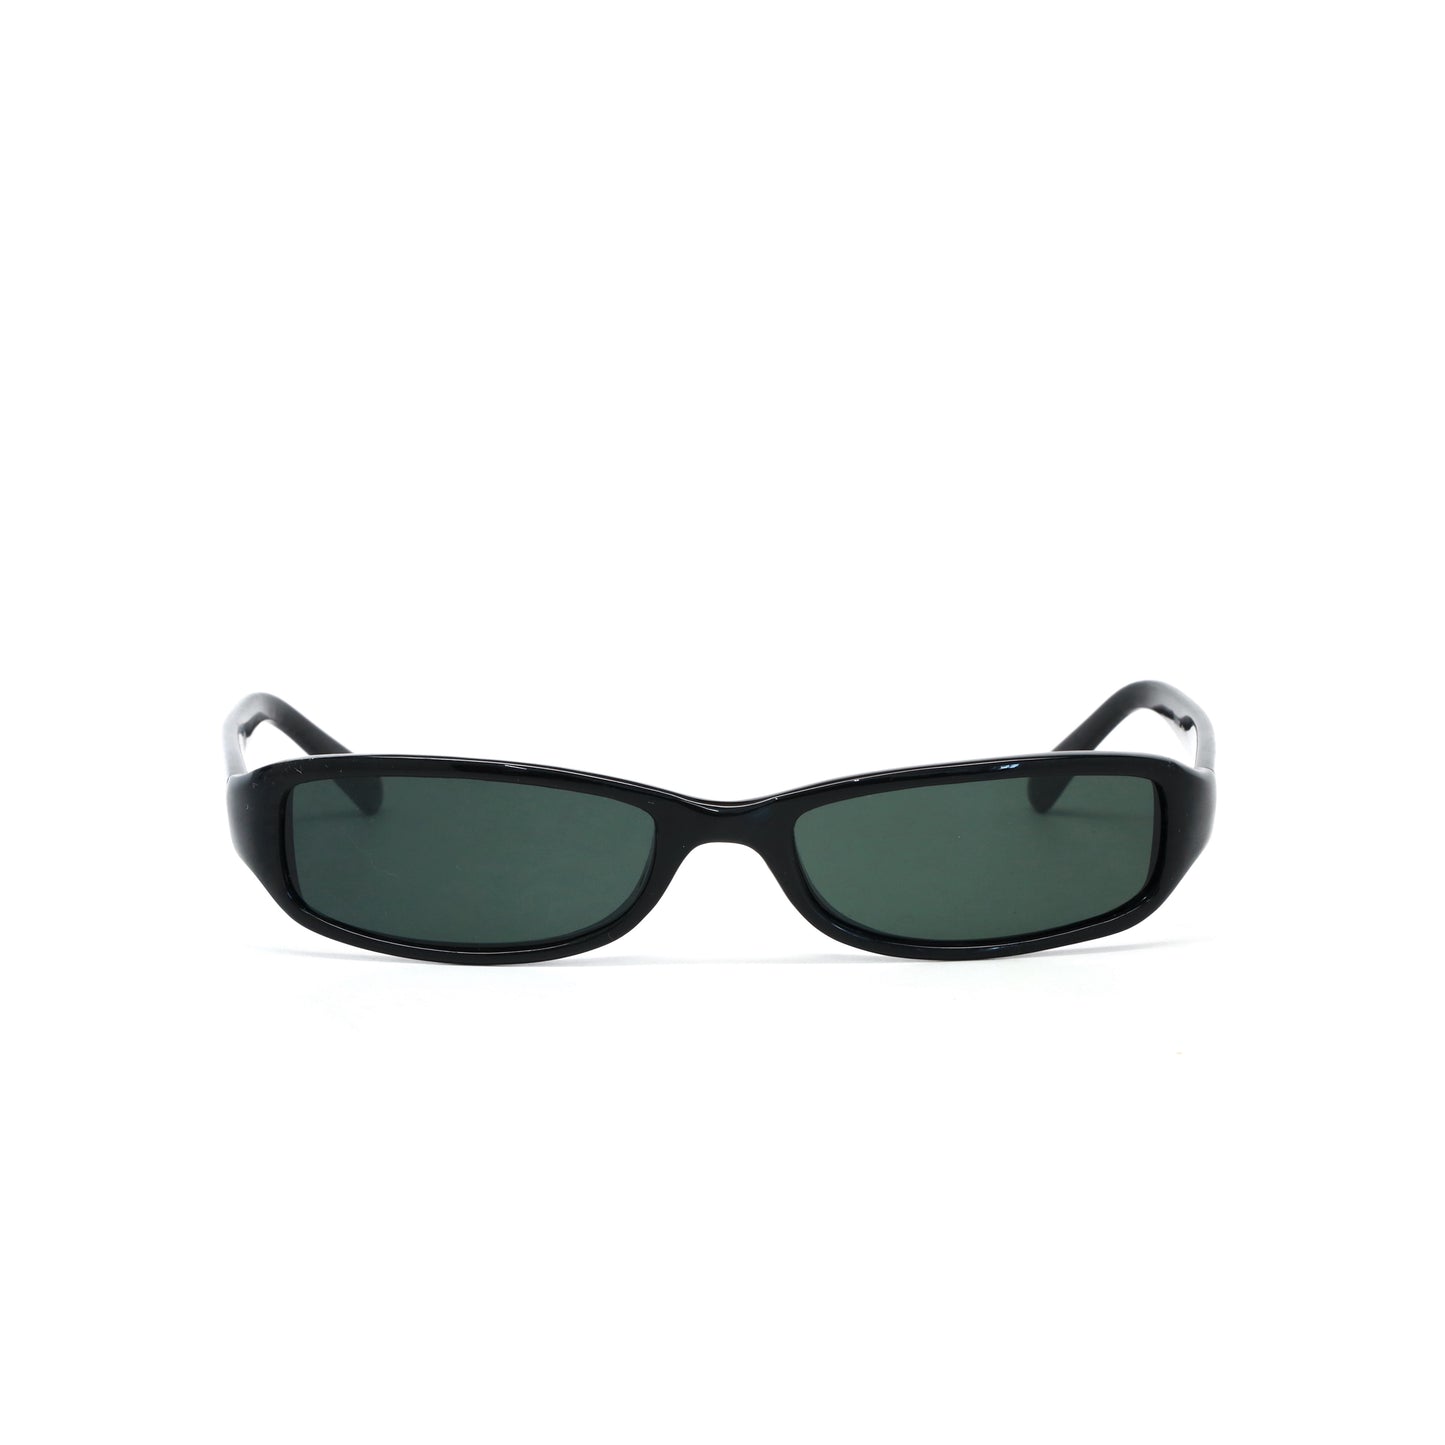 Vintage Small Size Jeanne Genuine Pastel Sunglasses - Black